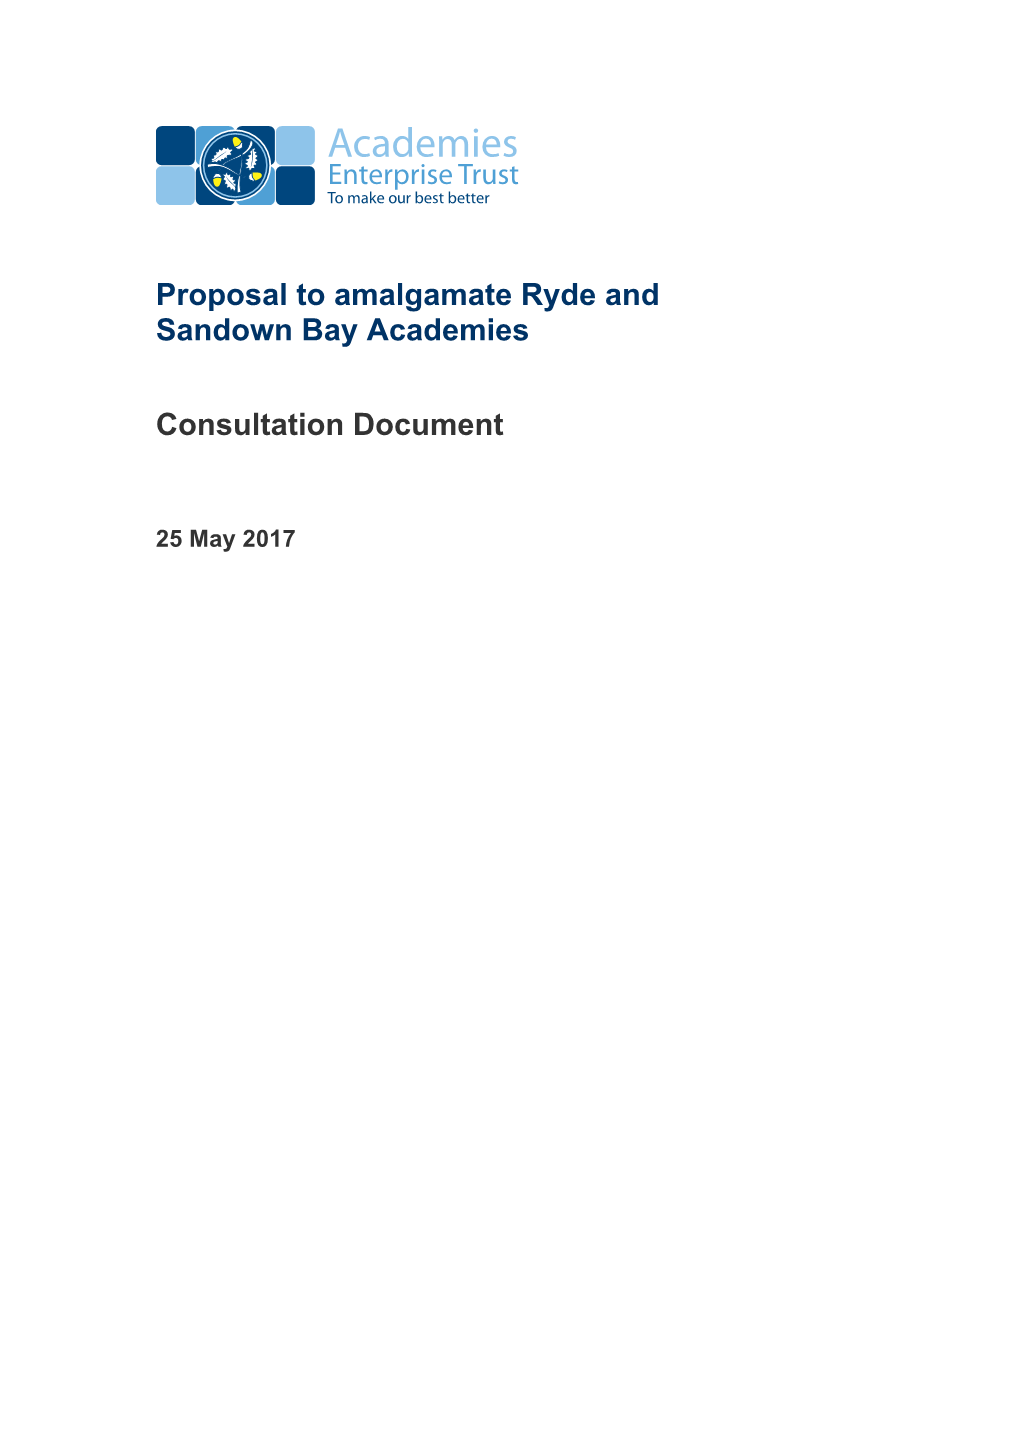 Proposal to Amalgamate Ryde and Sandown Bay Academies Consultation Document